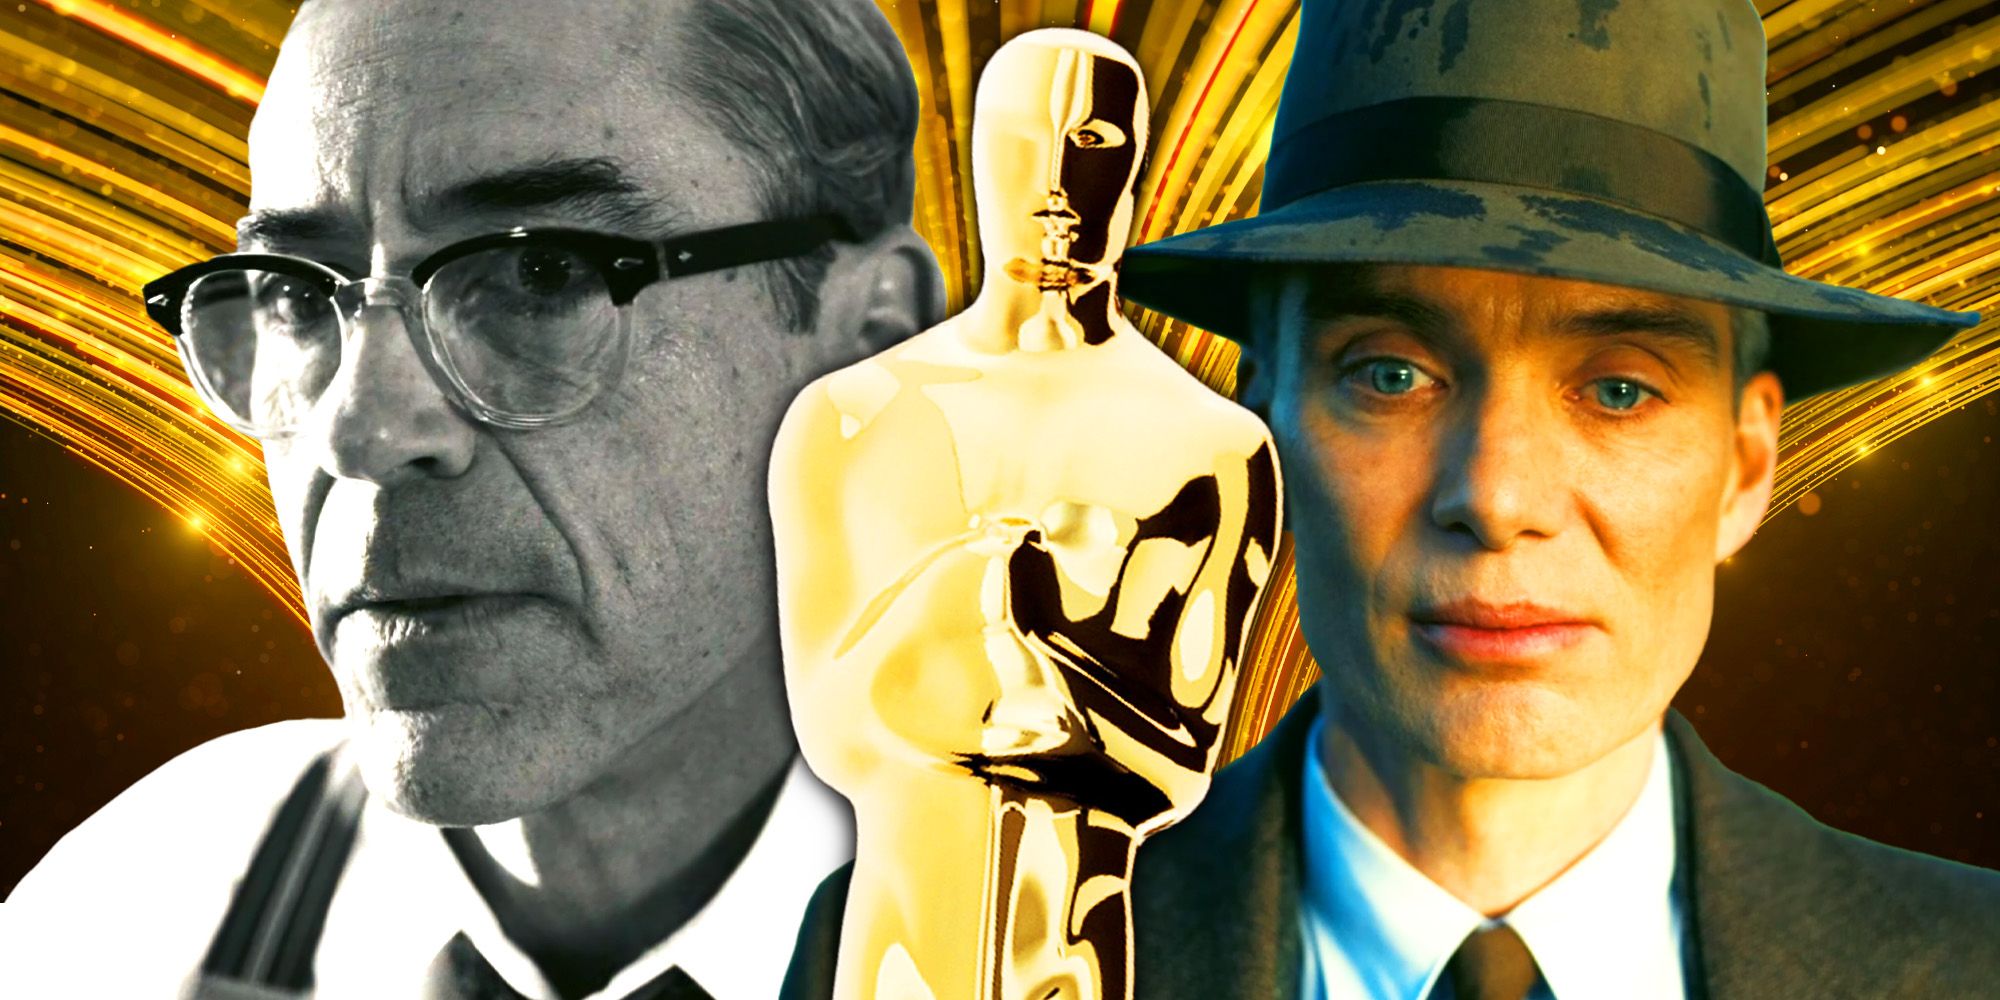 Cillian Murphy and RDJ in Oppenheimer, plus an Oscars statue